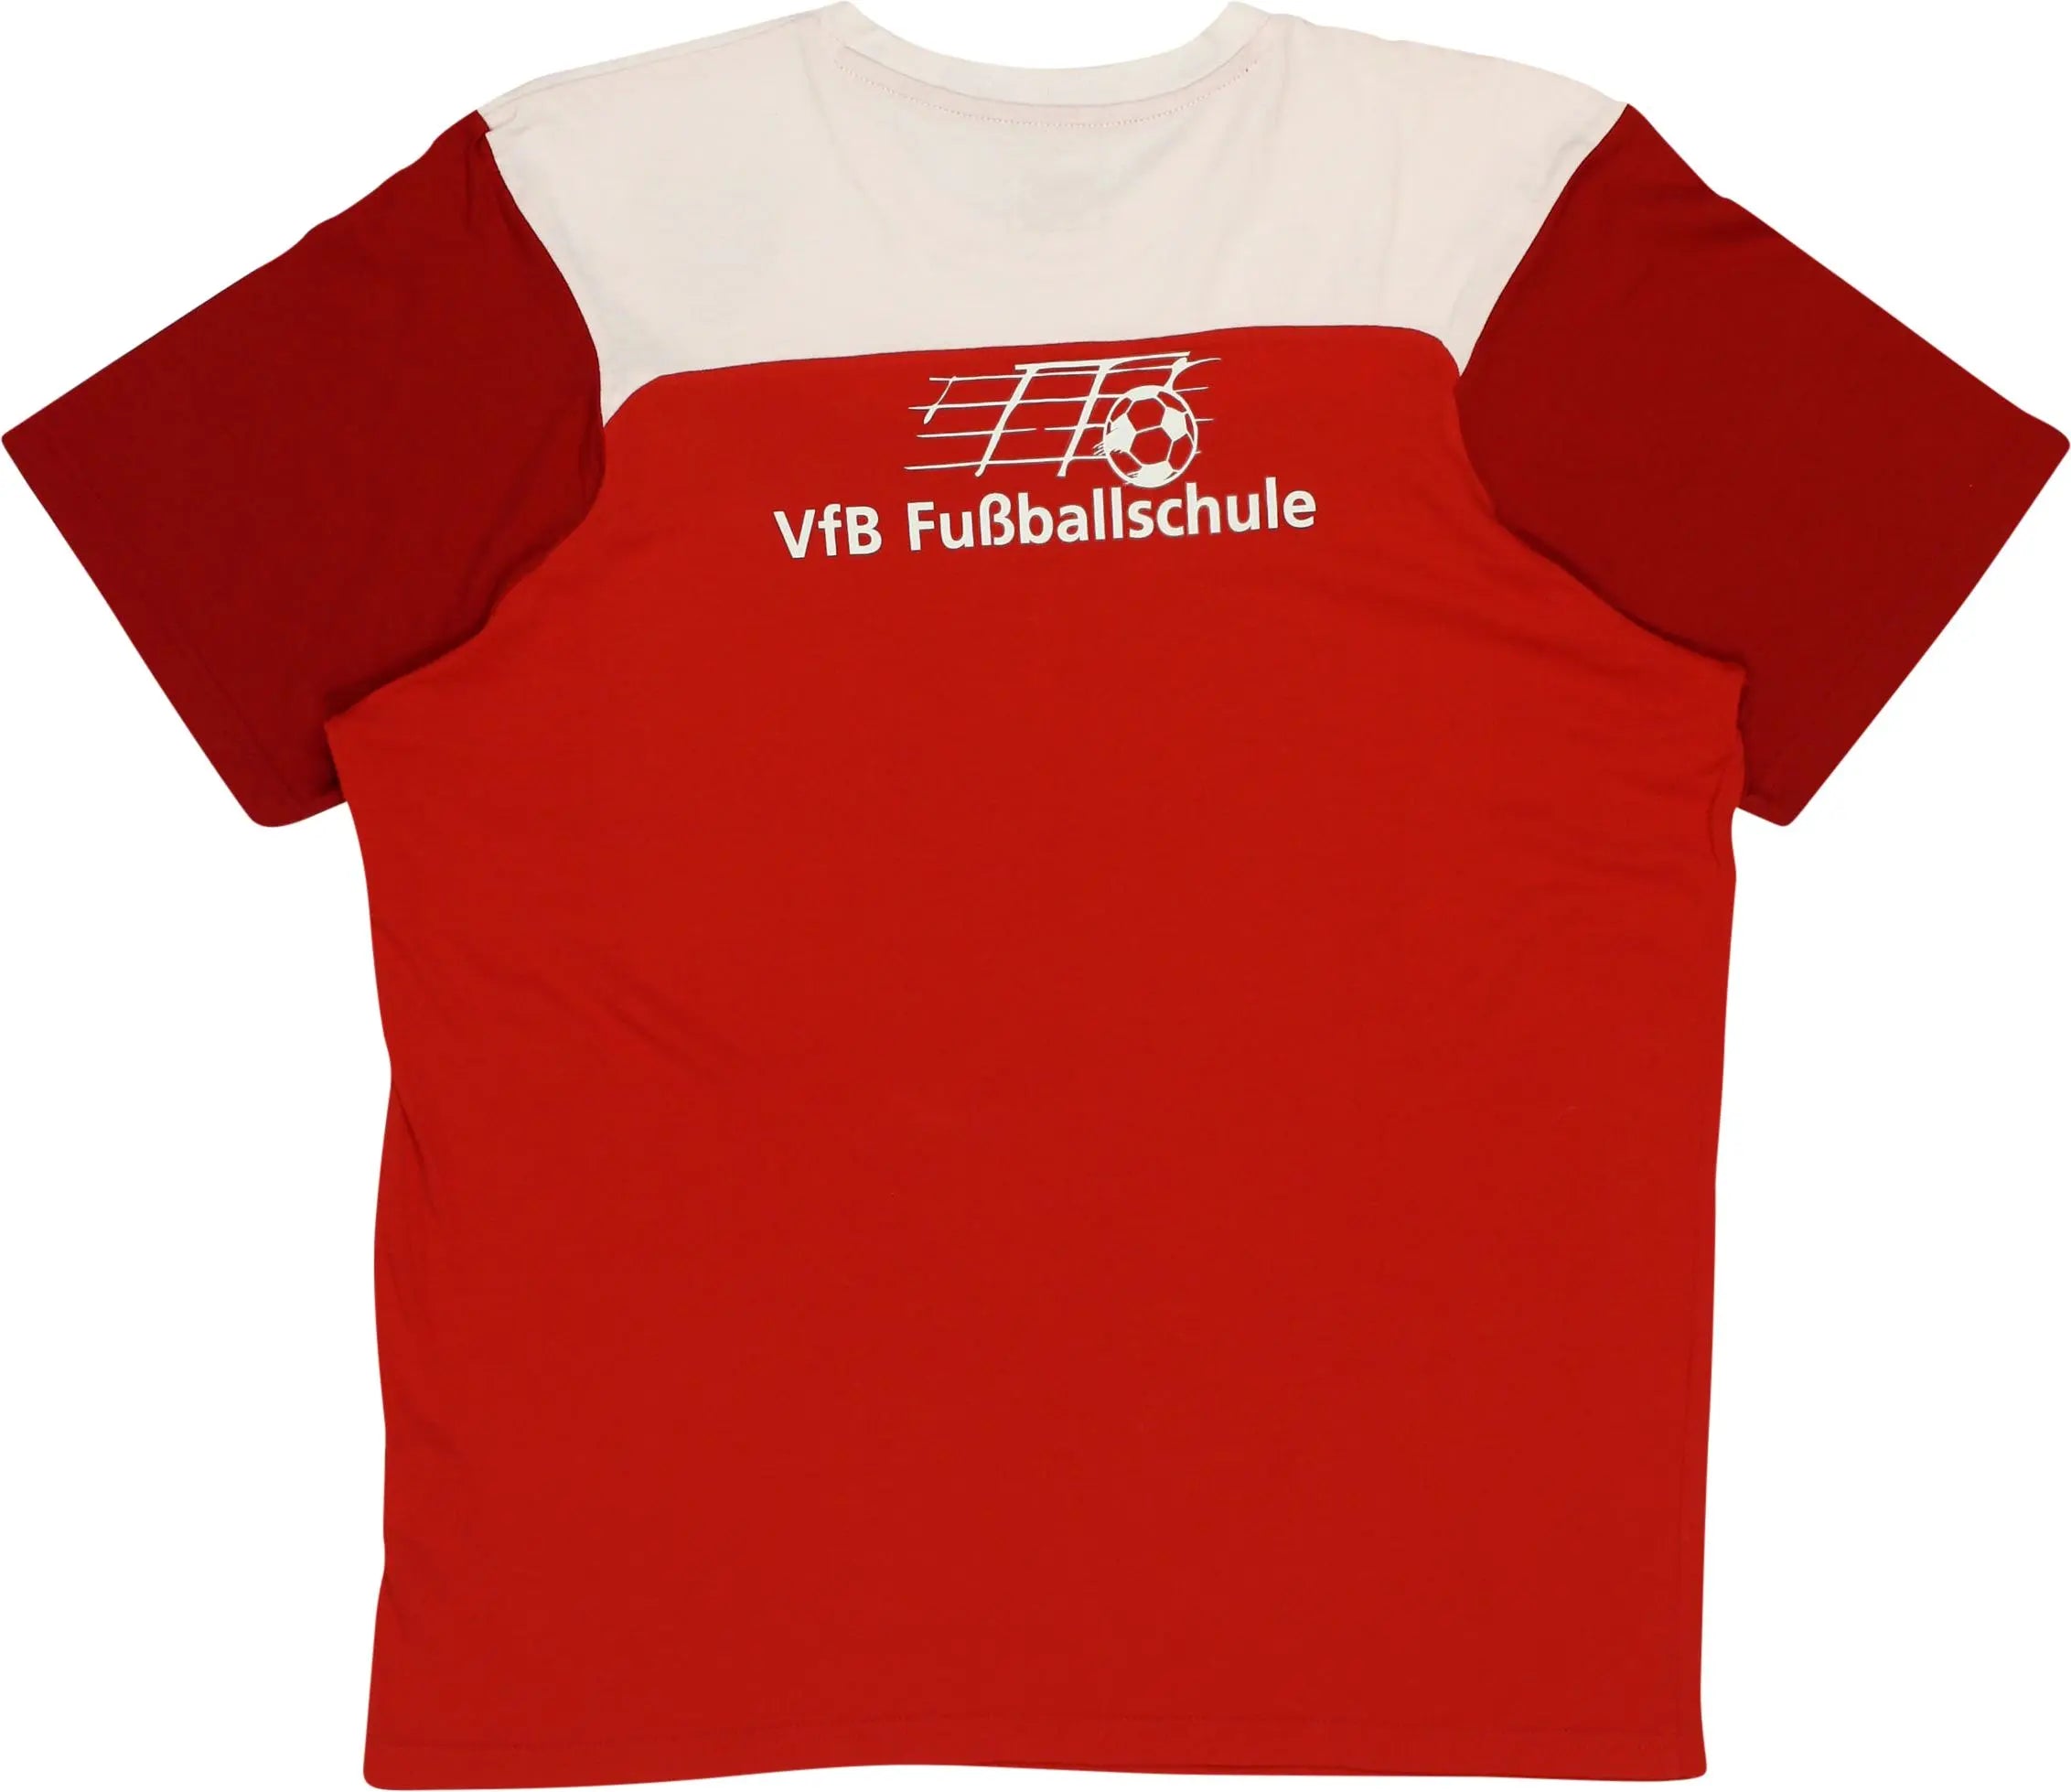 Puma - Puma Vfb Stuttgart T-shirt- ThriftTale.com - Vintage and second handclothing